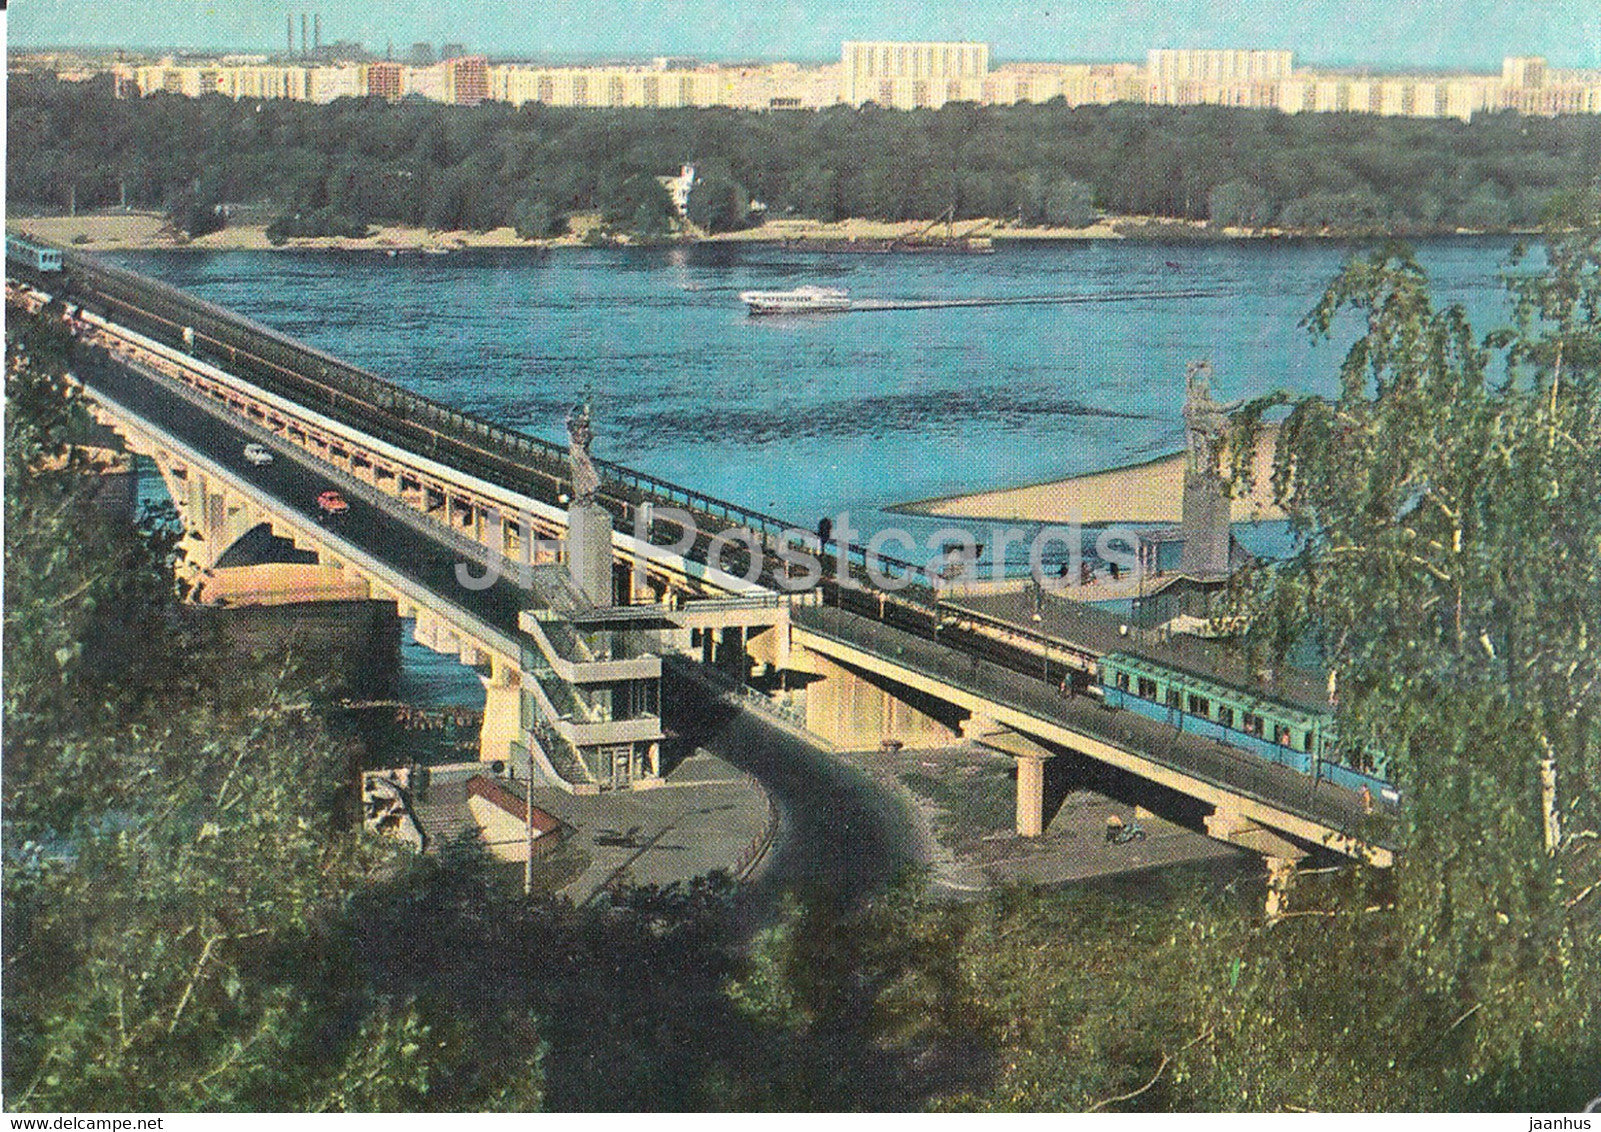 Kyiv - Kiev - Metro bridge across the Dnieper river - postal stationery - 1971 - Ukraine USSR - unused - JH Postcards